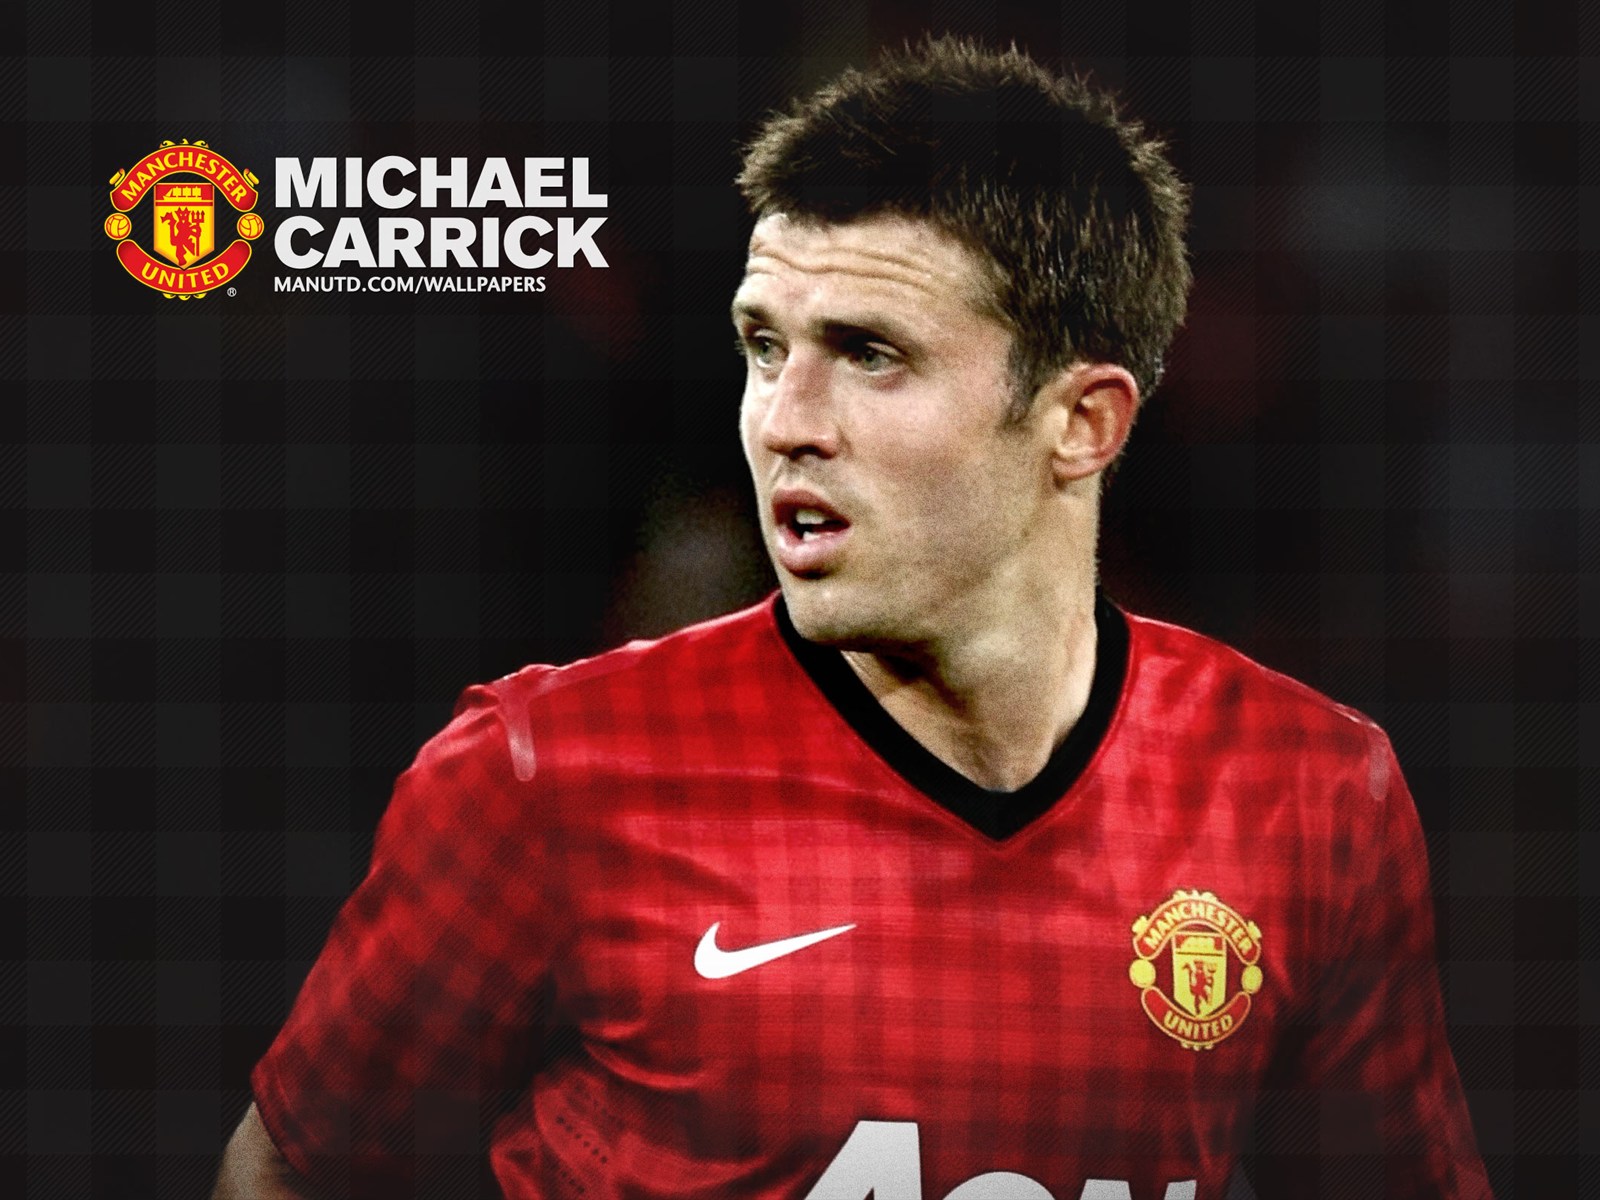 Central midfielder Michael Carrick